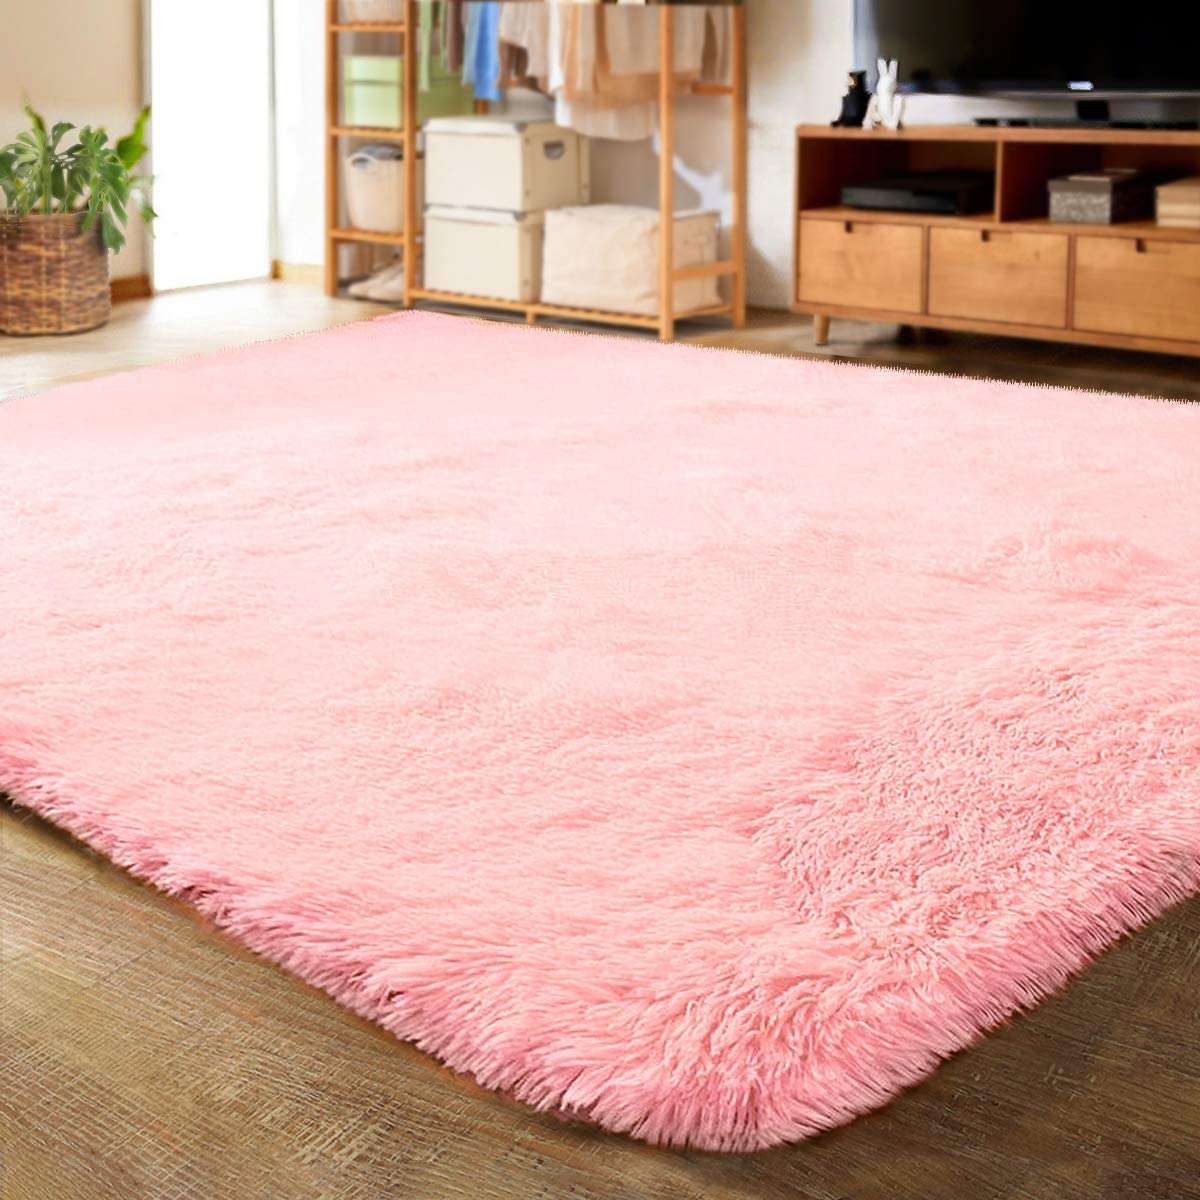 Lochas Soft Indoor Modern Area Rugs Fluffy Living Room Carpets for Children Bedroom Home Decor Nursery Rug 4' x 5.3', Pink - image 1 of 7